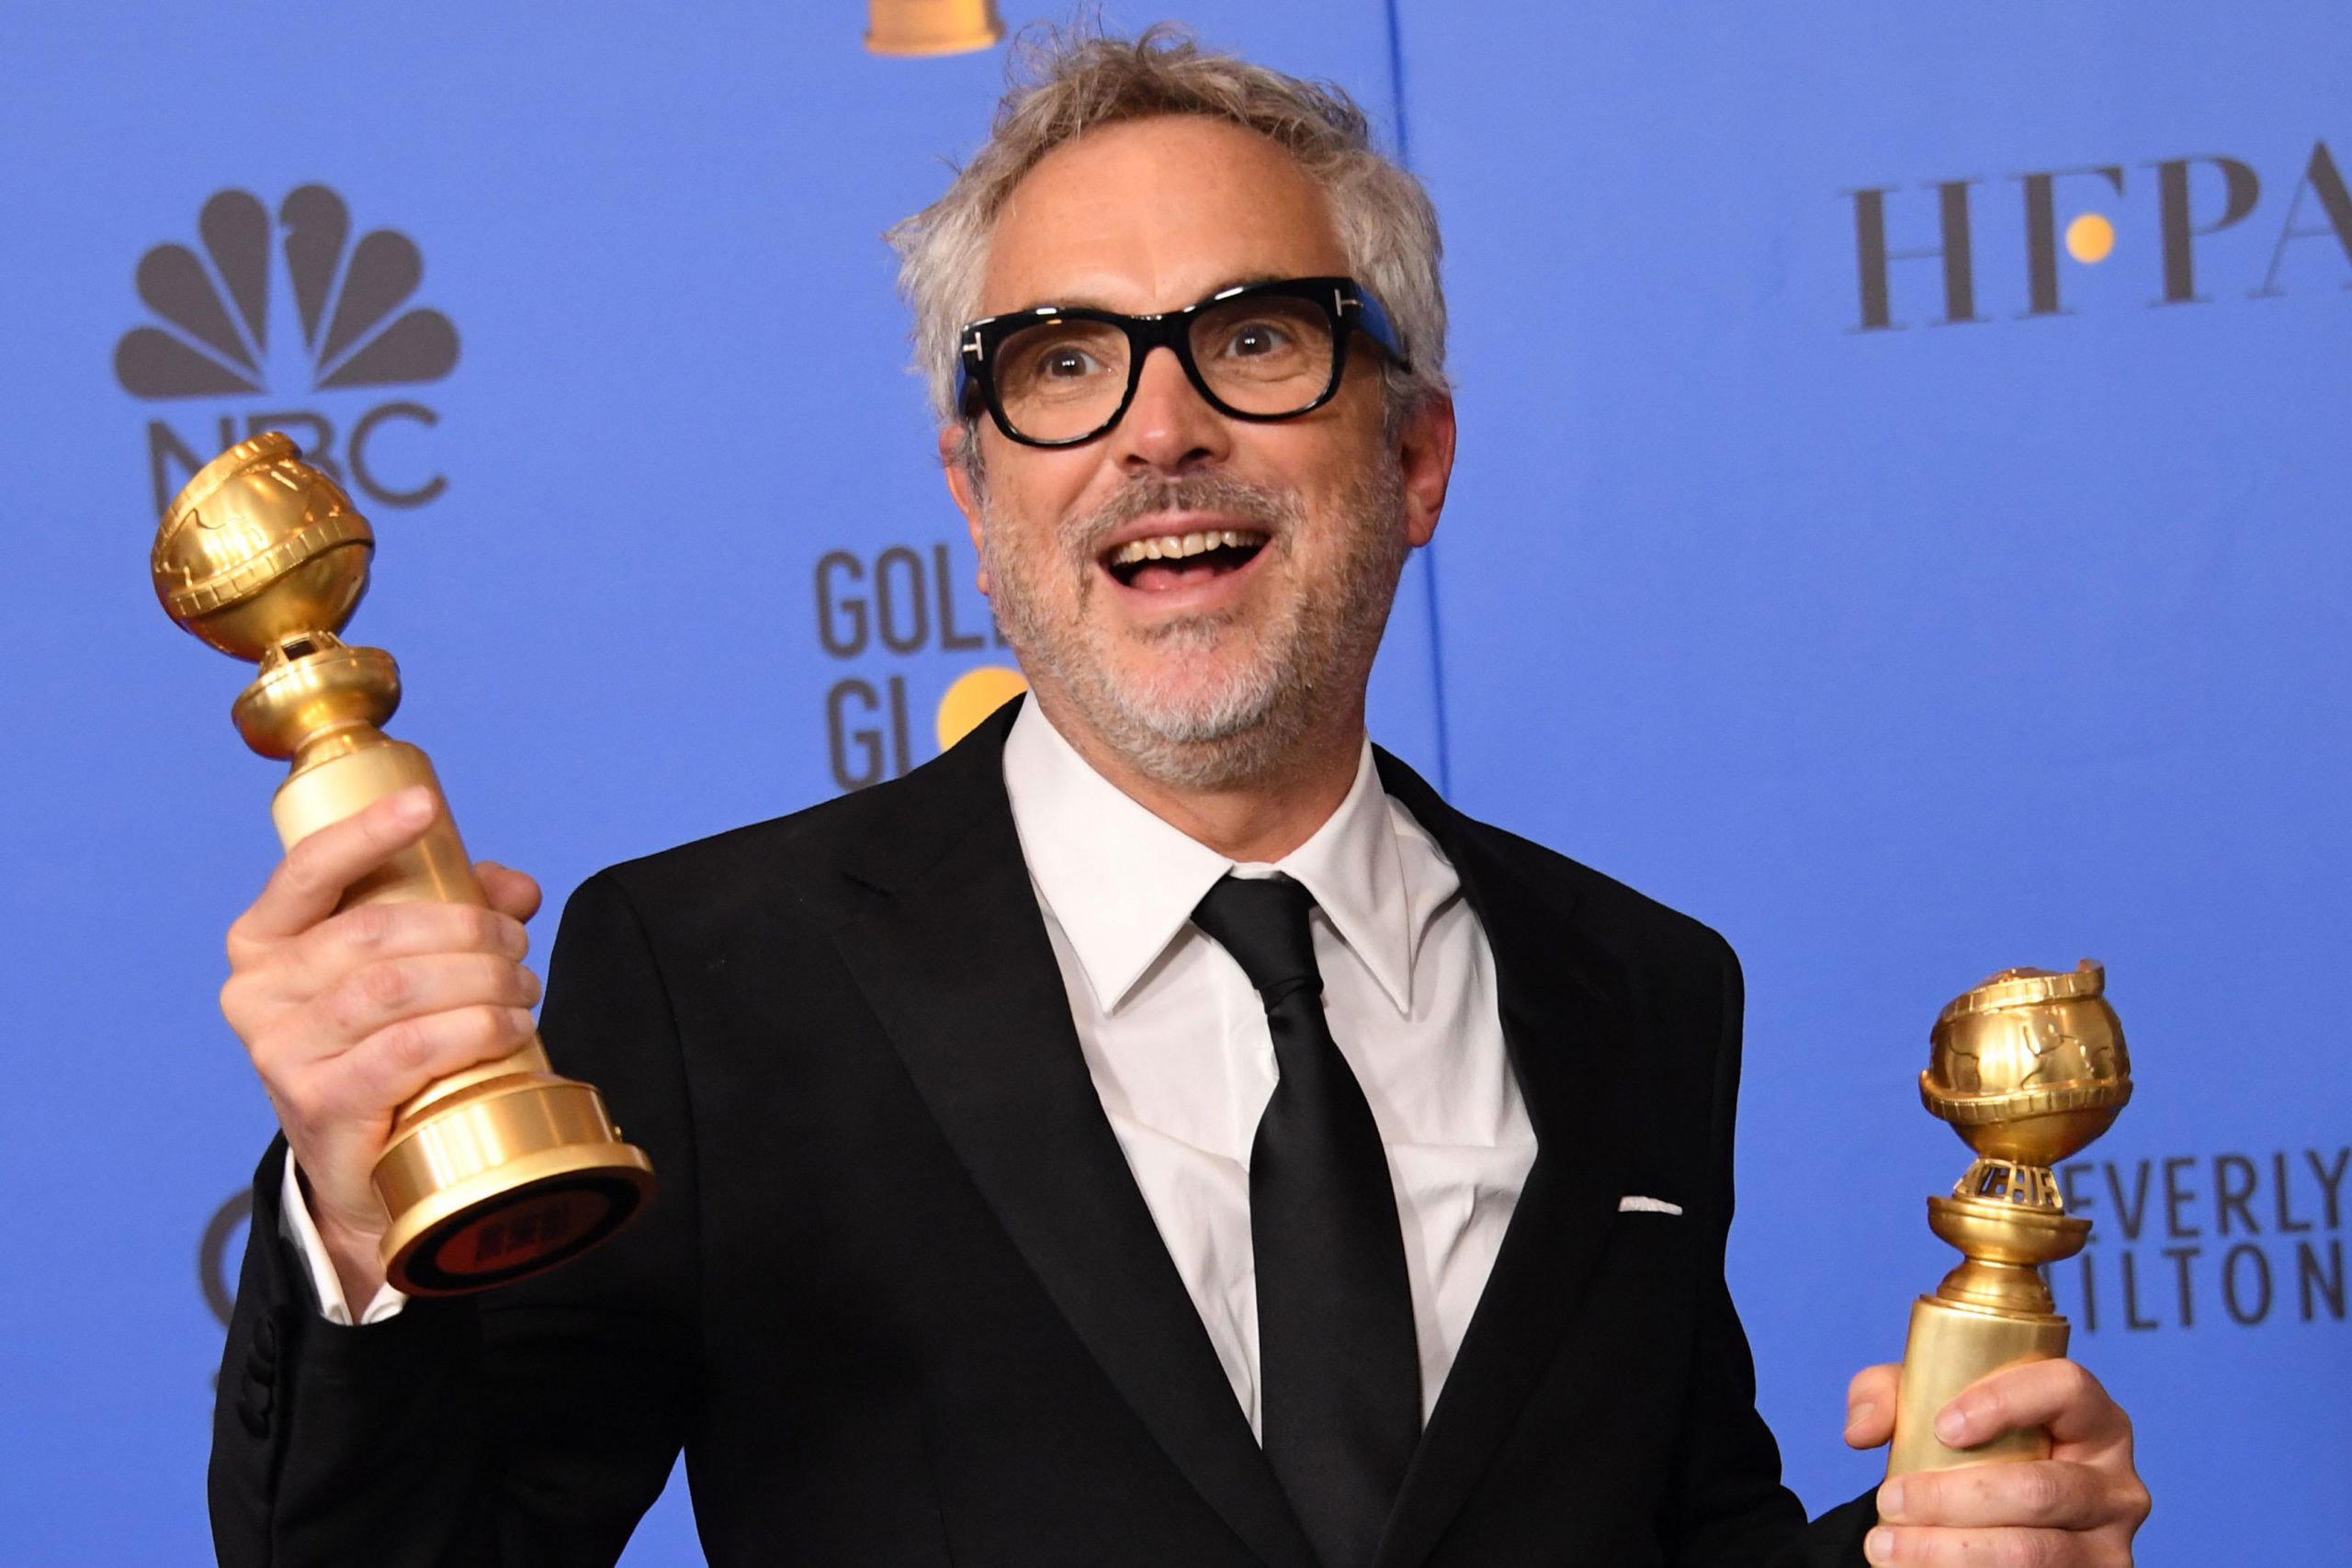 The Golden Globe Awards aren’t nice at predicting Oscar winners